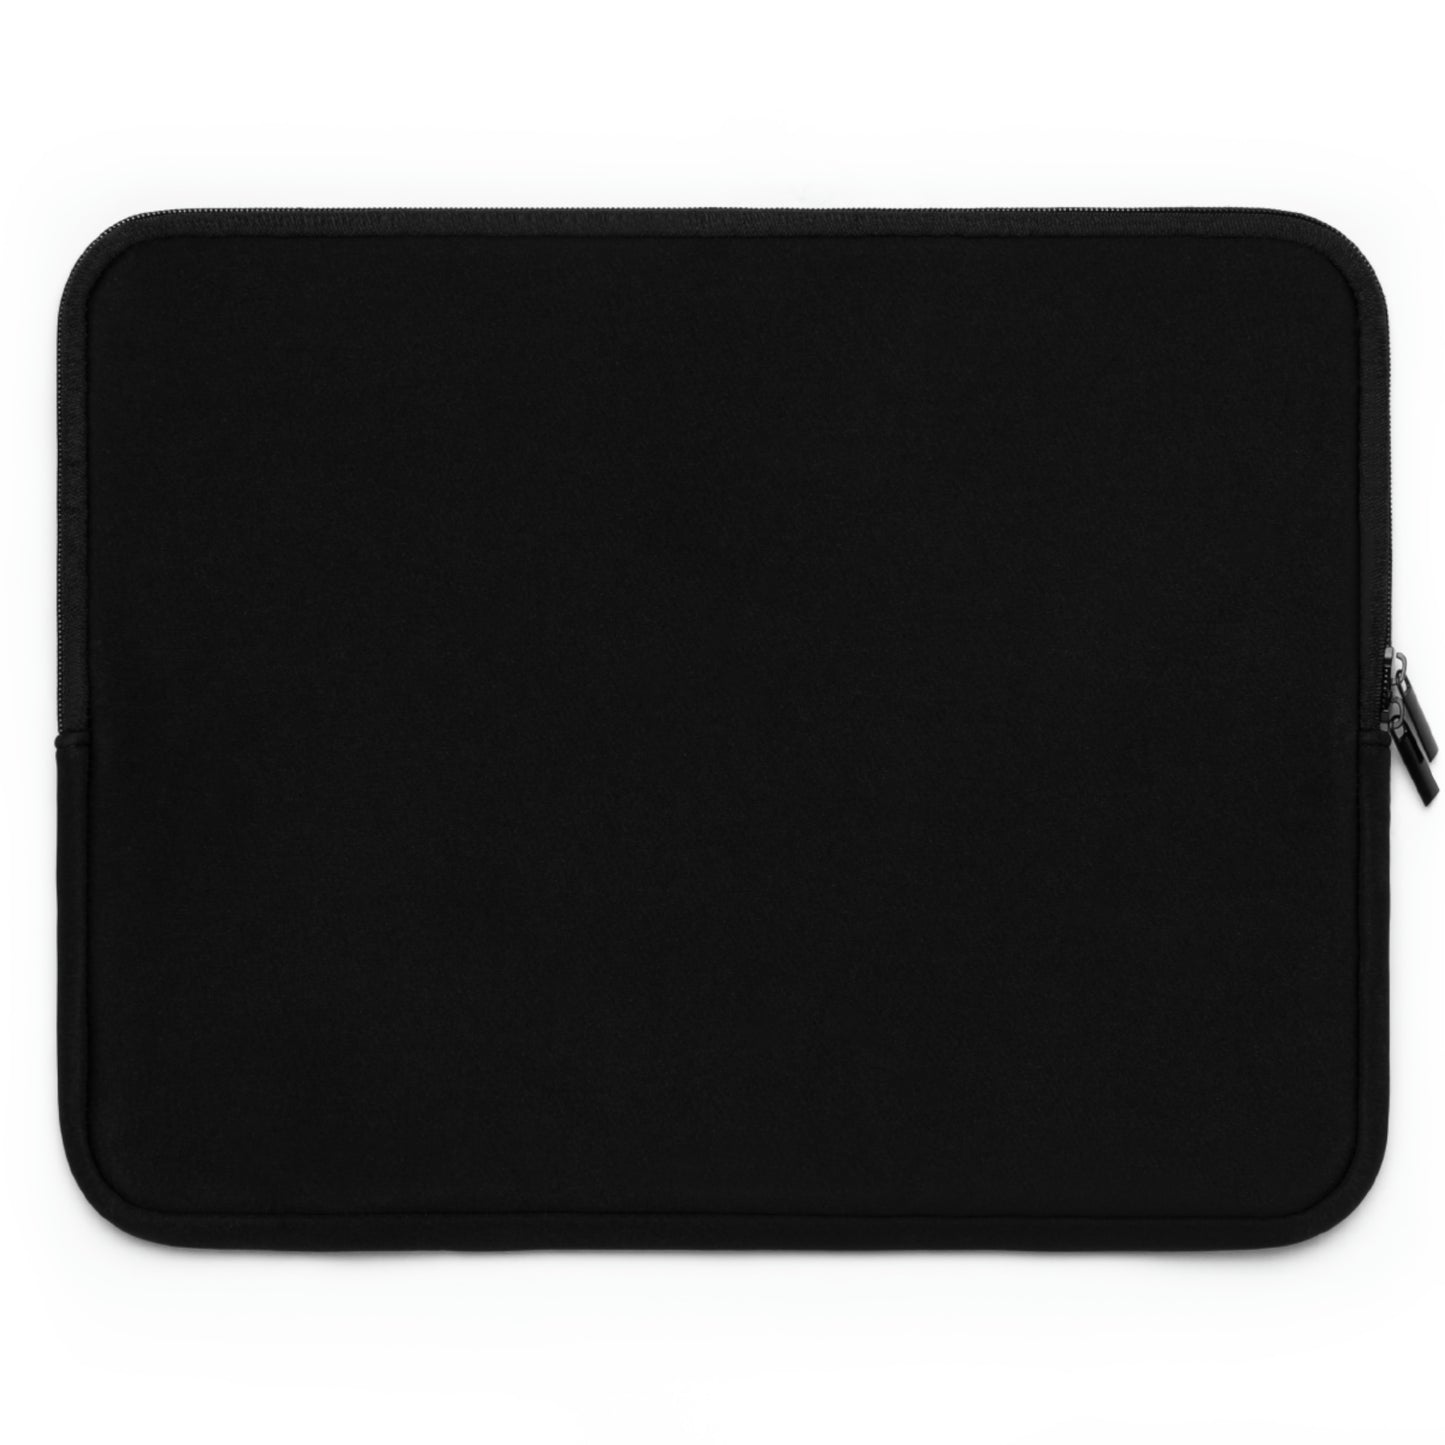 Black and White Iris Laptop Sleeve